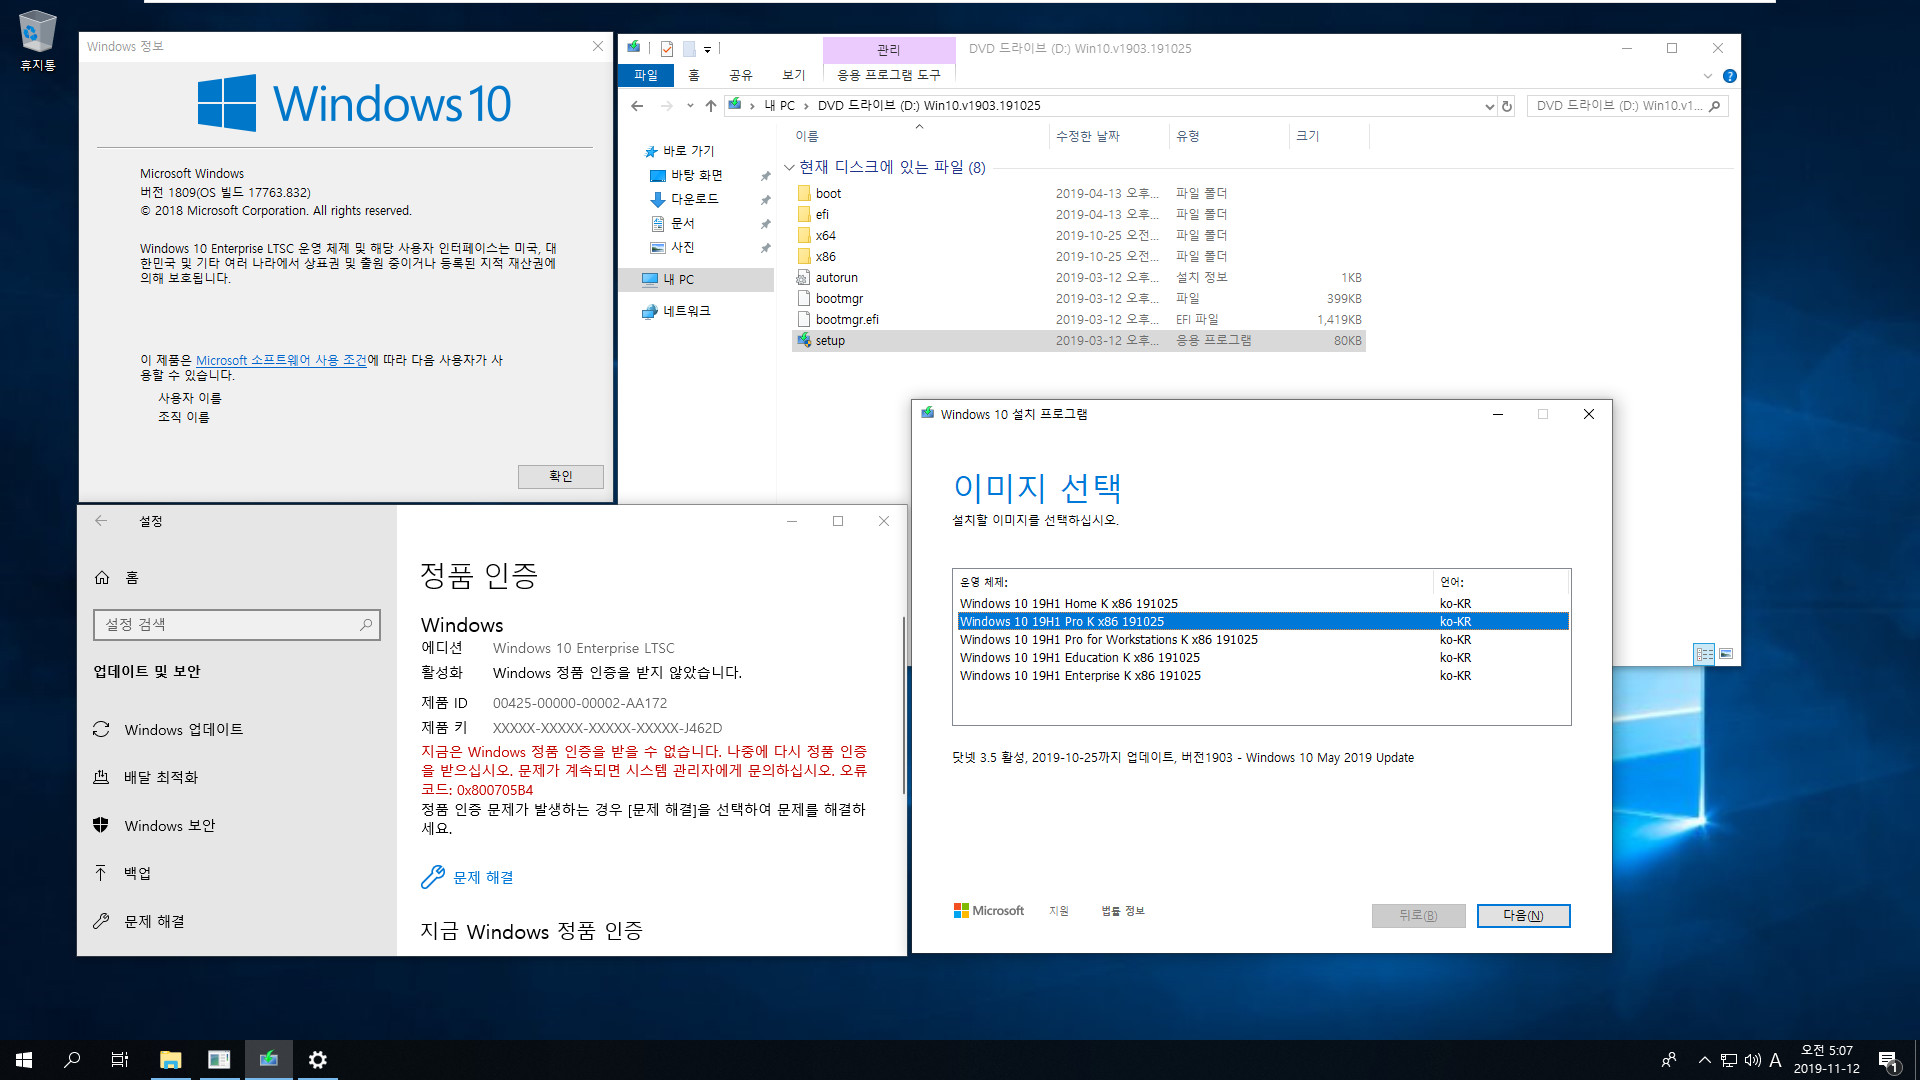 Windows 10 Enterprise LTSC [2019] (버전 1809) 를 버전 1903 프로로 업그레이드 설치하기 - 우선 설정과 앱 유지를 위해서 버전 1903 Enterprise로 업그레이드 한 후에 버전 1903 Pro로 변경하면 됩니다 2019-11-12_050712.jpg